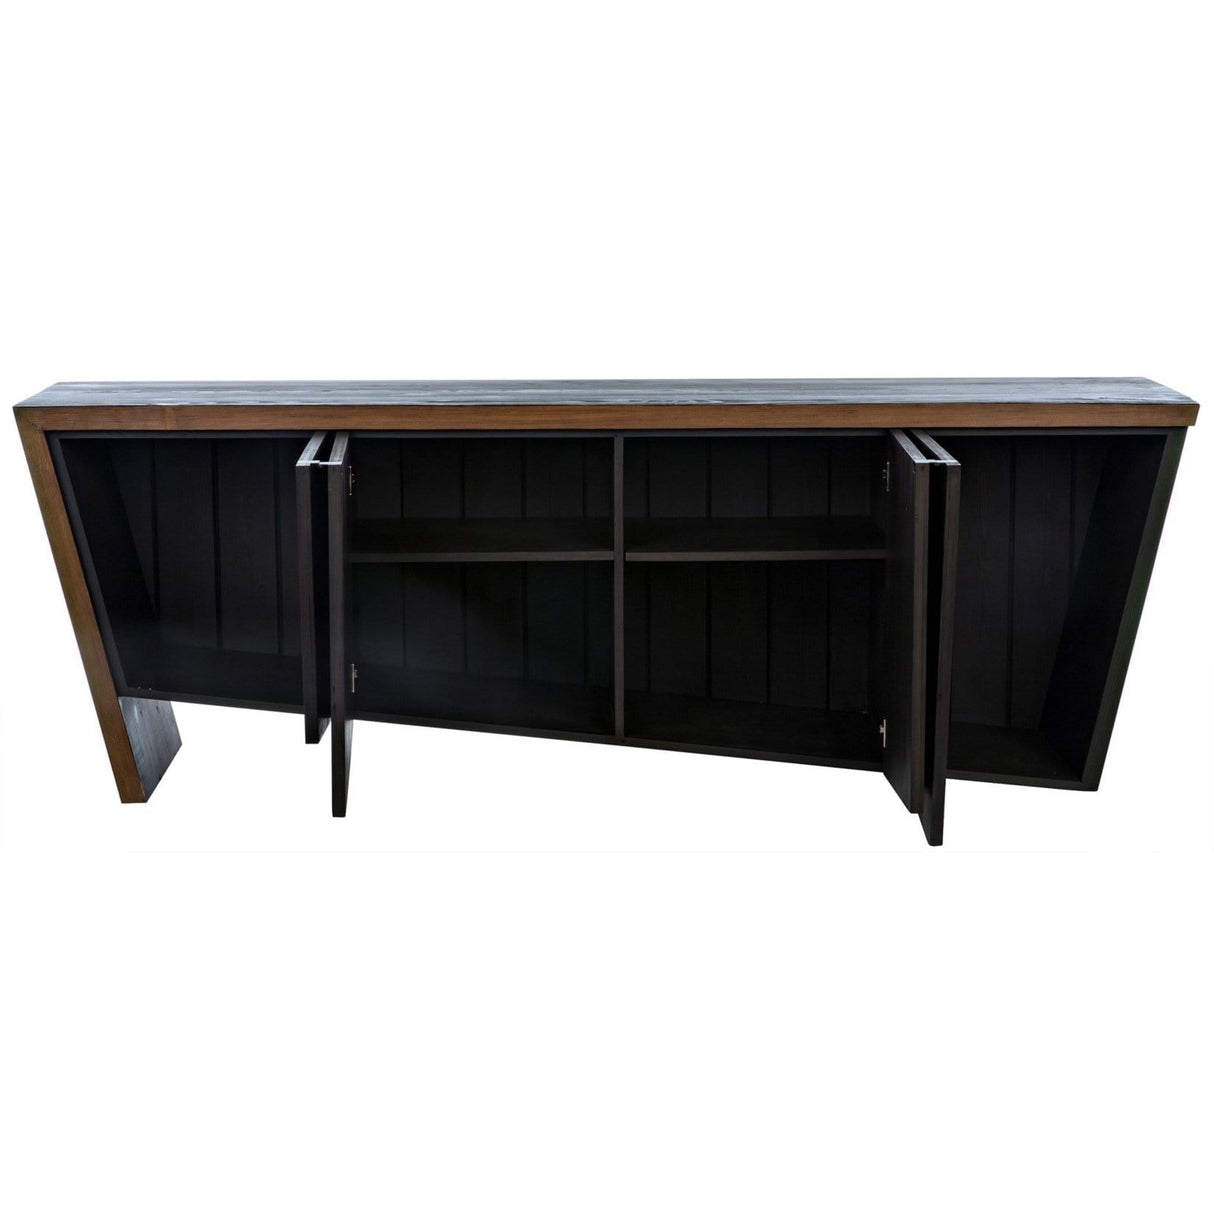 CFC Wisteria Sideboard - Black Wax Furniture cfc-OW355